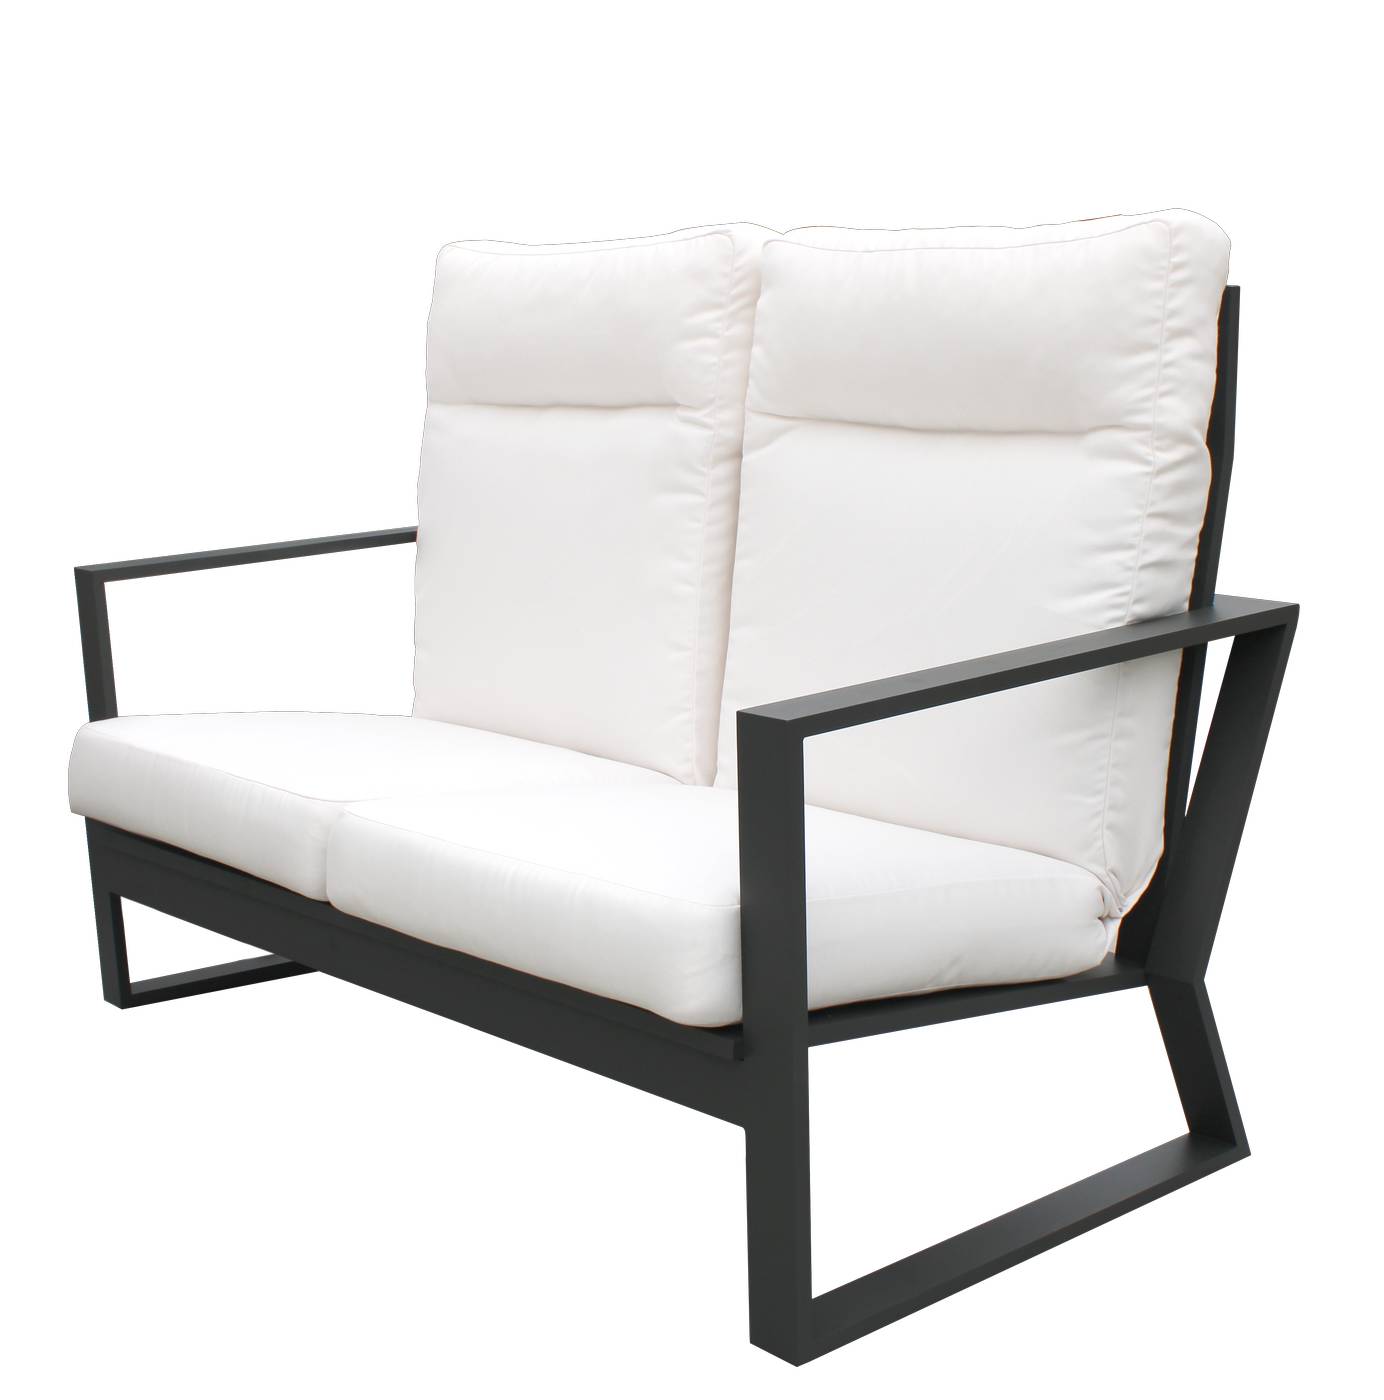 Sofá relax-confort 2 plazas con cojines desenfundables. Estructura de aluminio  color blanco, plata, marrón, champagne o antracita.